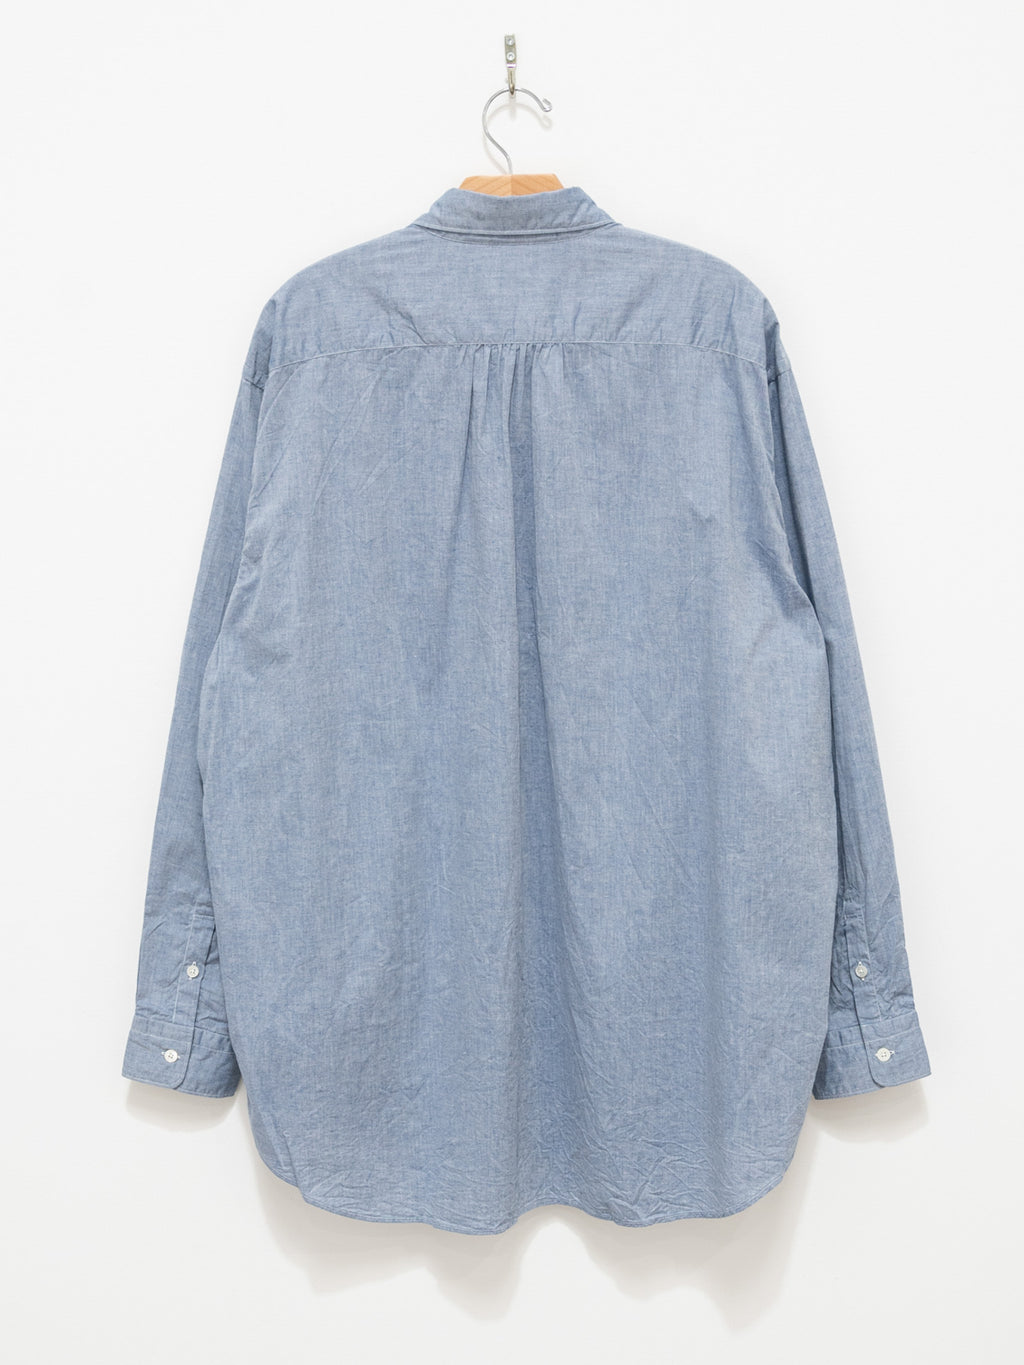 Namu Shop - Fujito B/S Shirt - Blue Chambray